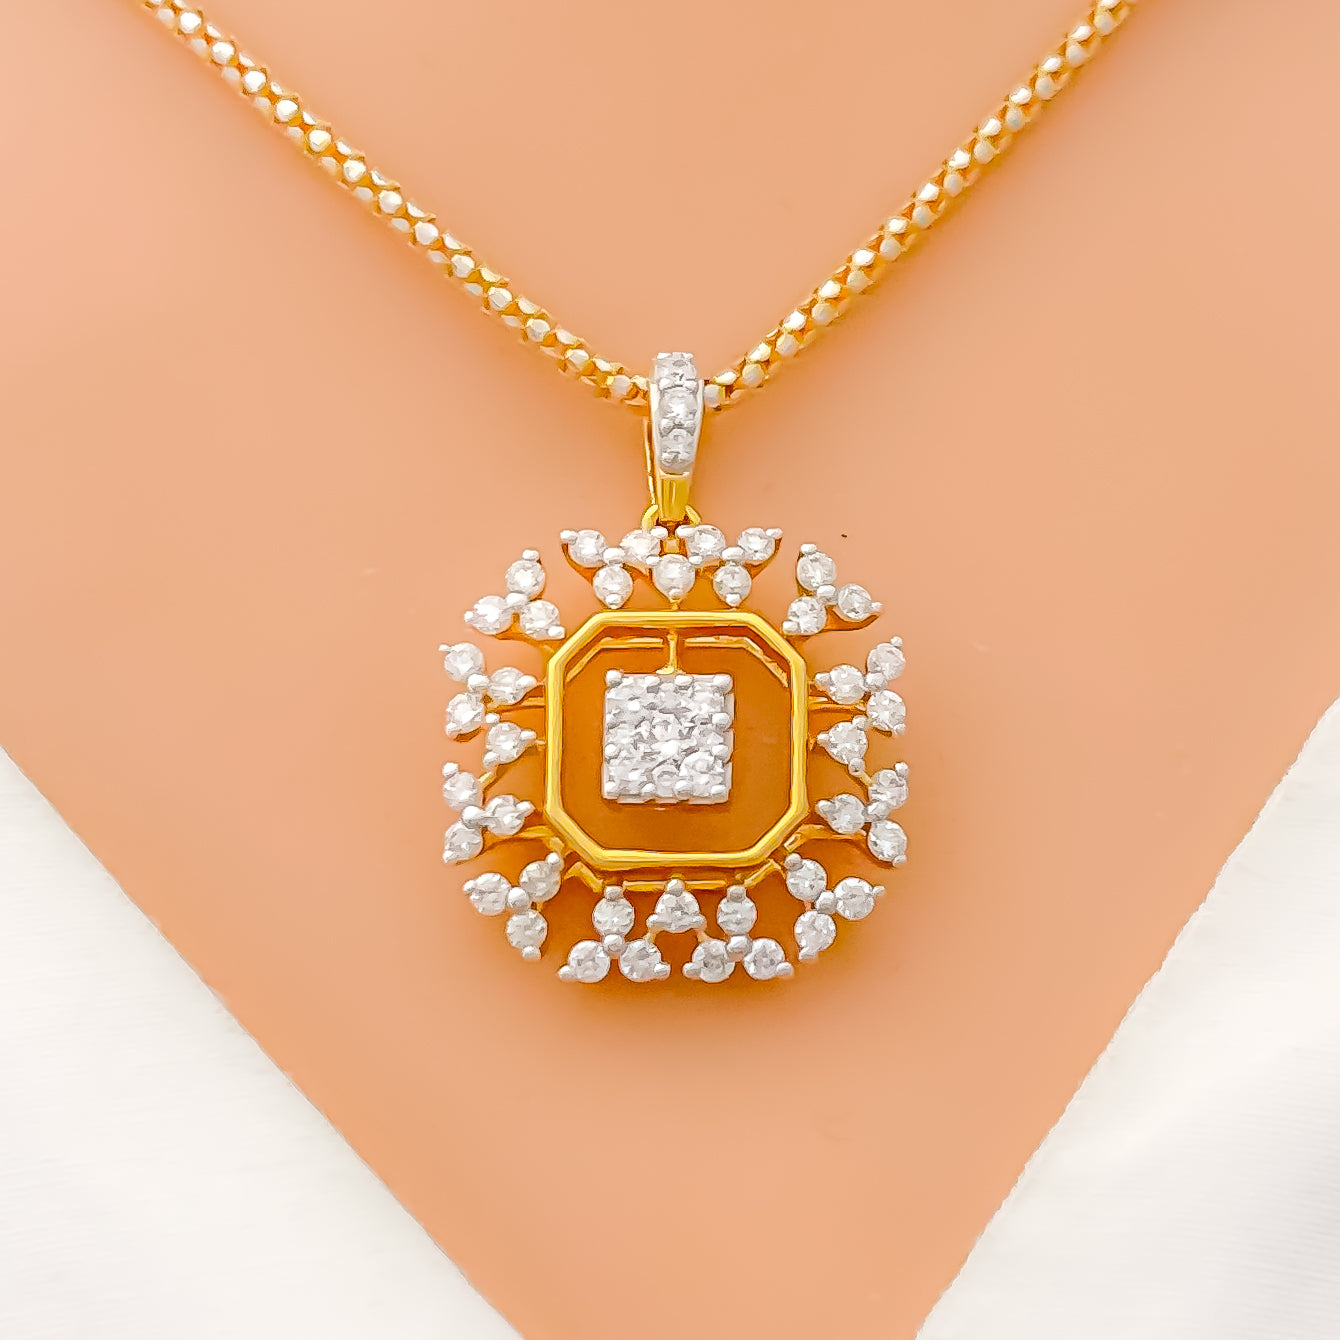 Buy Classic Diamond Necklace, 2 Cts Round Brilliant Cut Diamond Simulant  Pendant, Unique Square Halo Design, White Gold Plated Sterling Silver  Online in India - Etsy